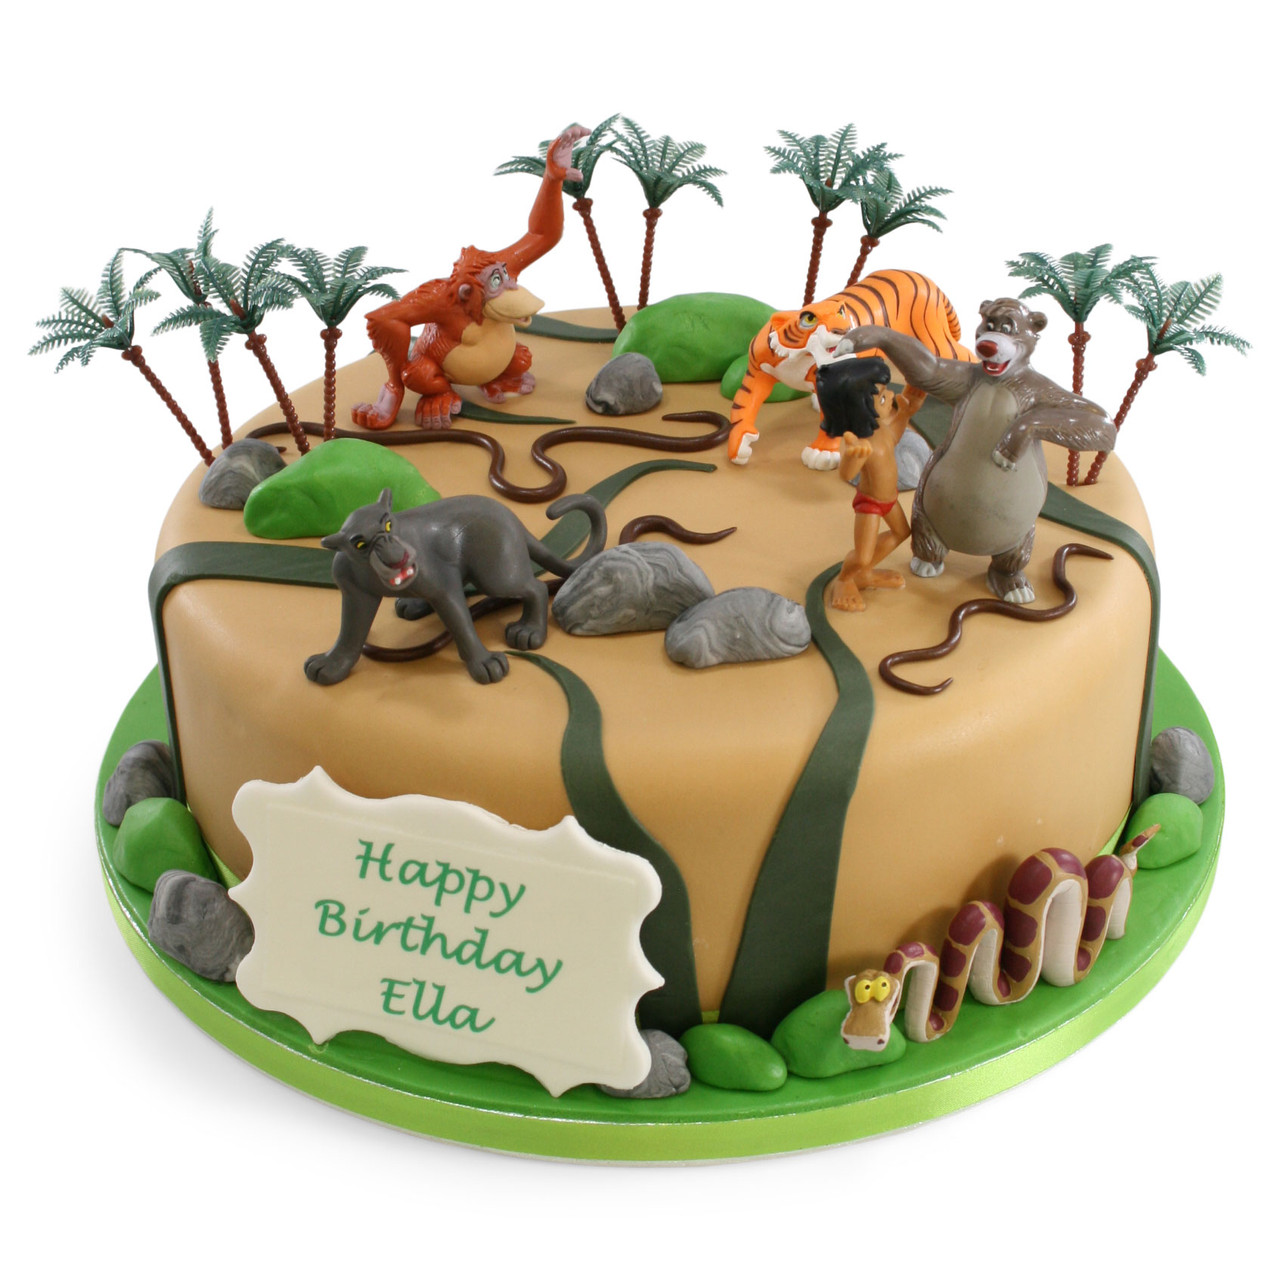 Jungle Book themed Birthday Cakes and Cupcakes | Cakes and Cupcakes Mumbai